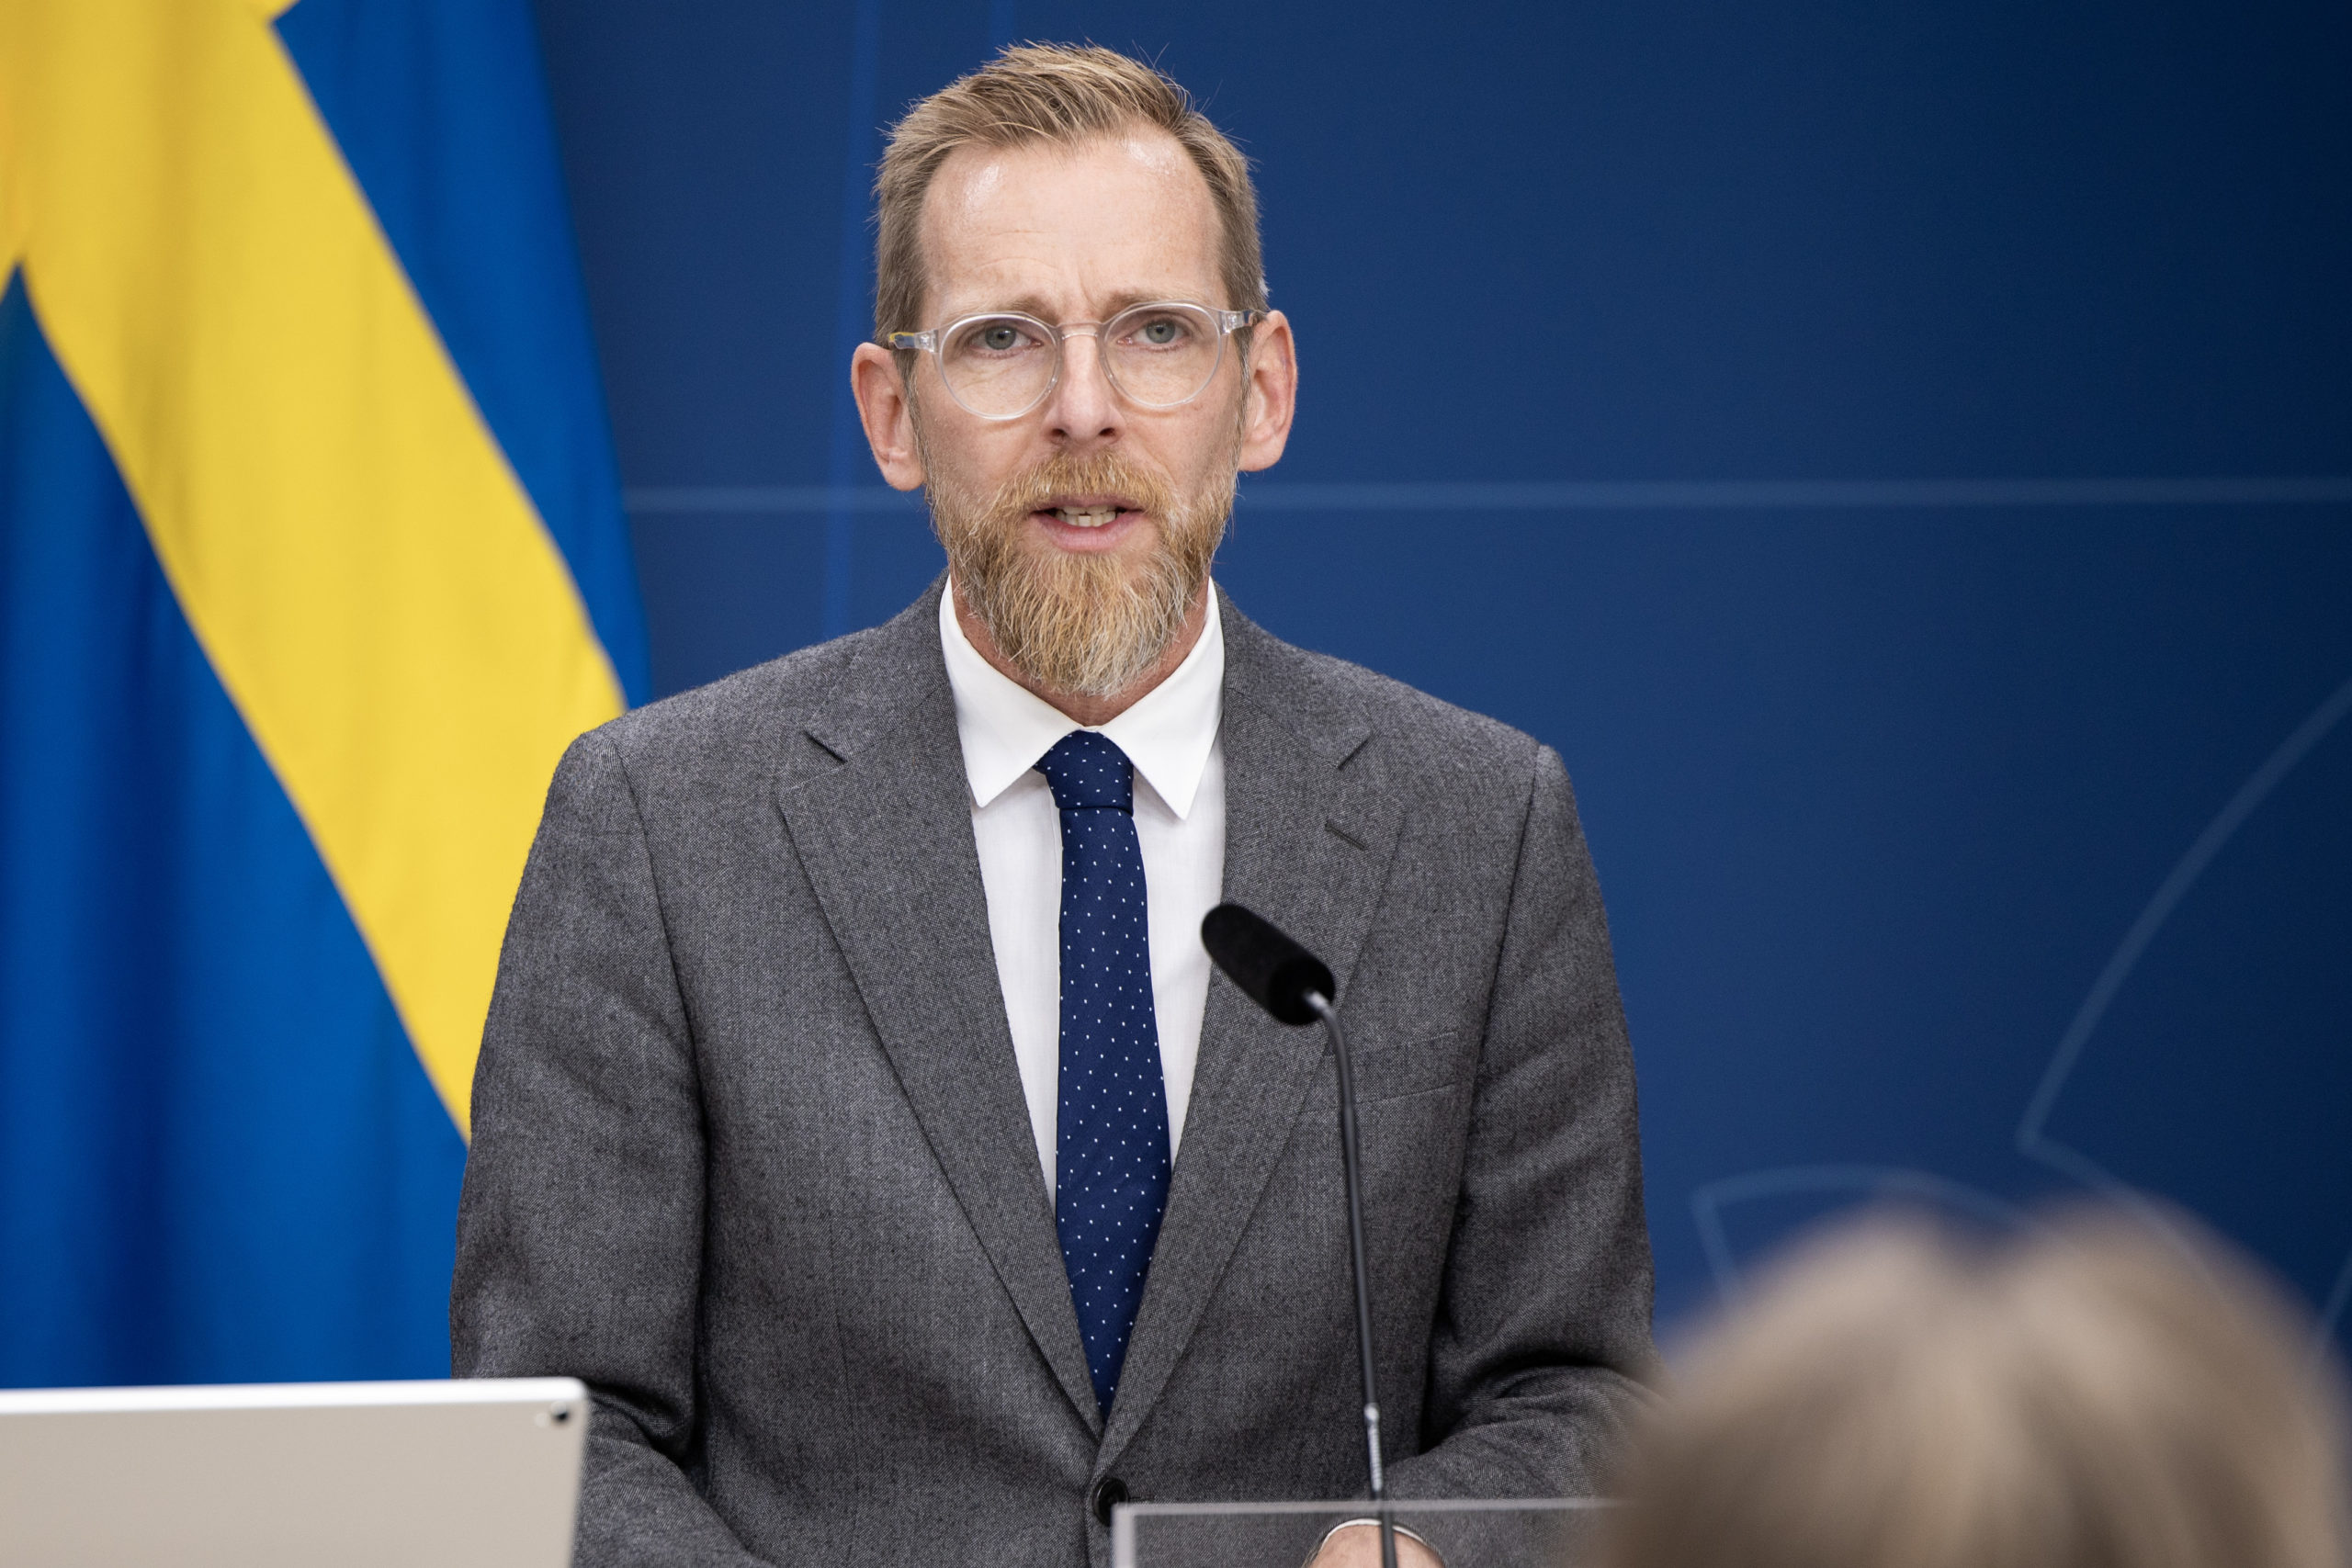 Jakob Forssmed presskonferens i Regeringskansliet. Foto: Ninni Andersson/Regeringskansliet